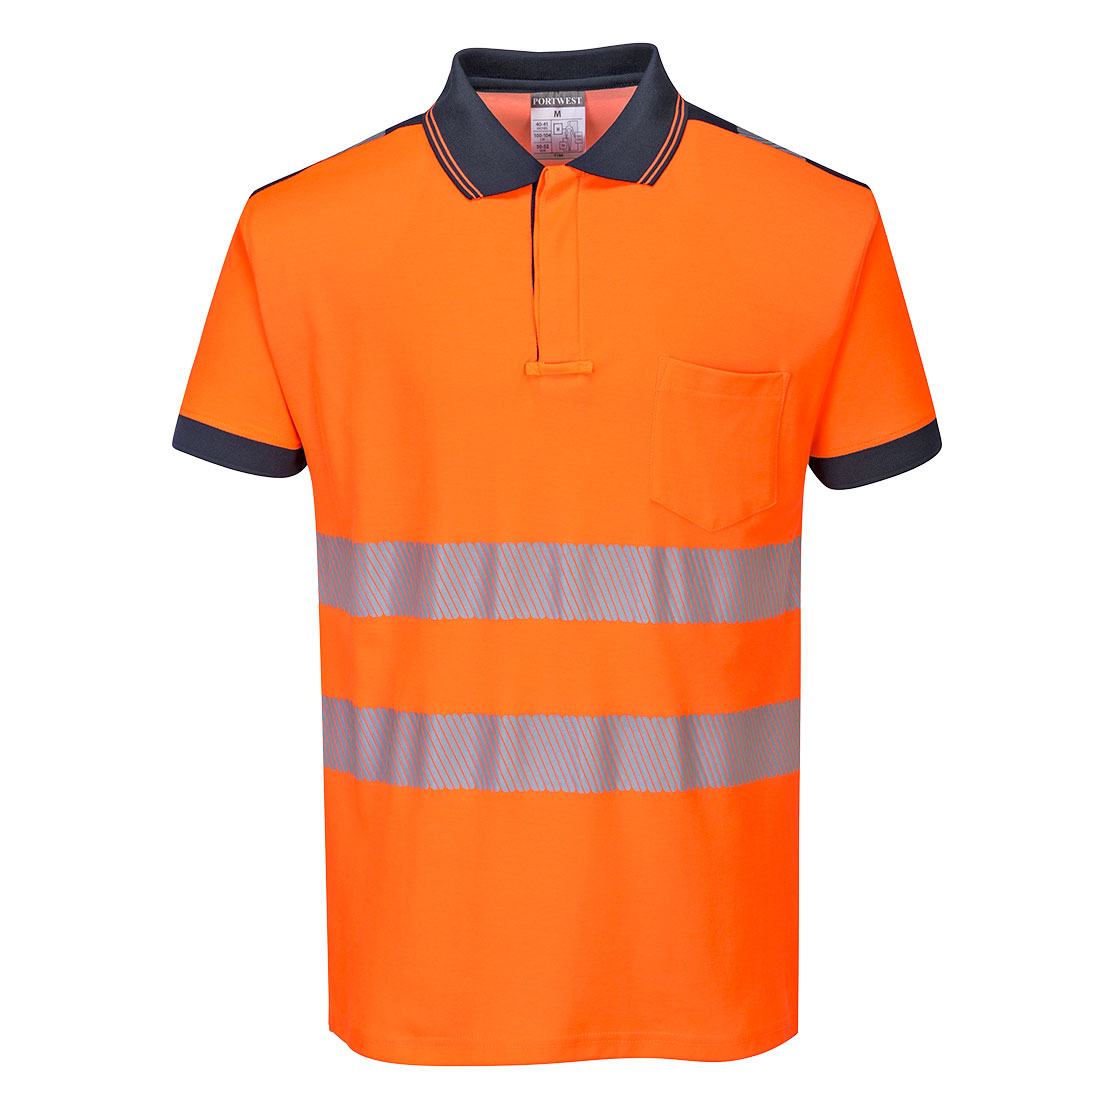 Portwest PW3 Hi-Vis Cotton Comfort Short Sleeve Polo Shirt - Orange/Yellow